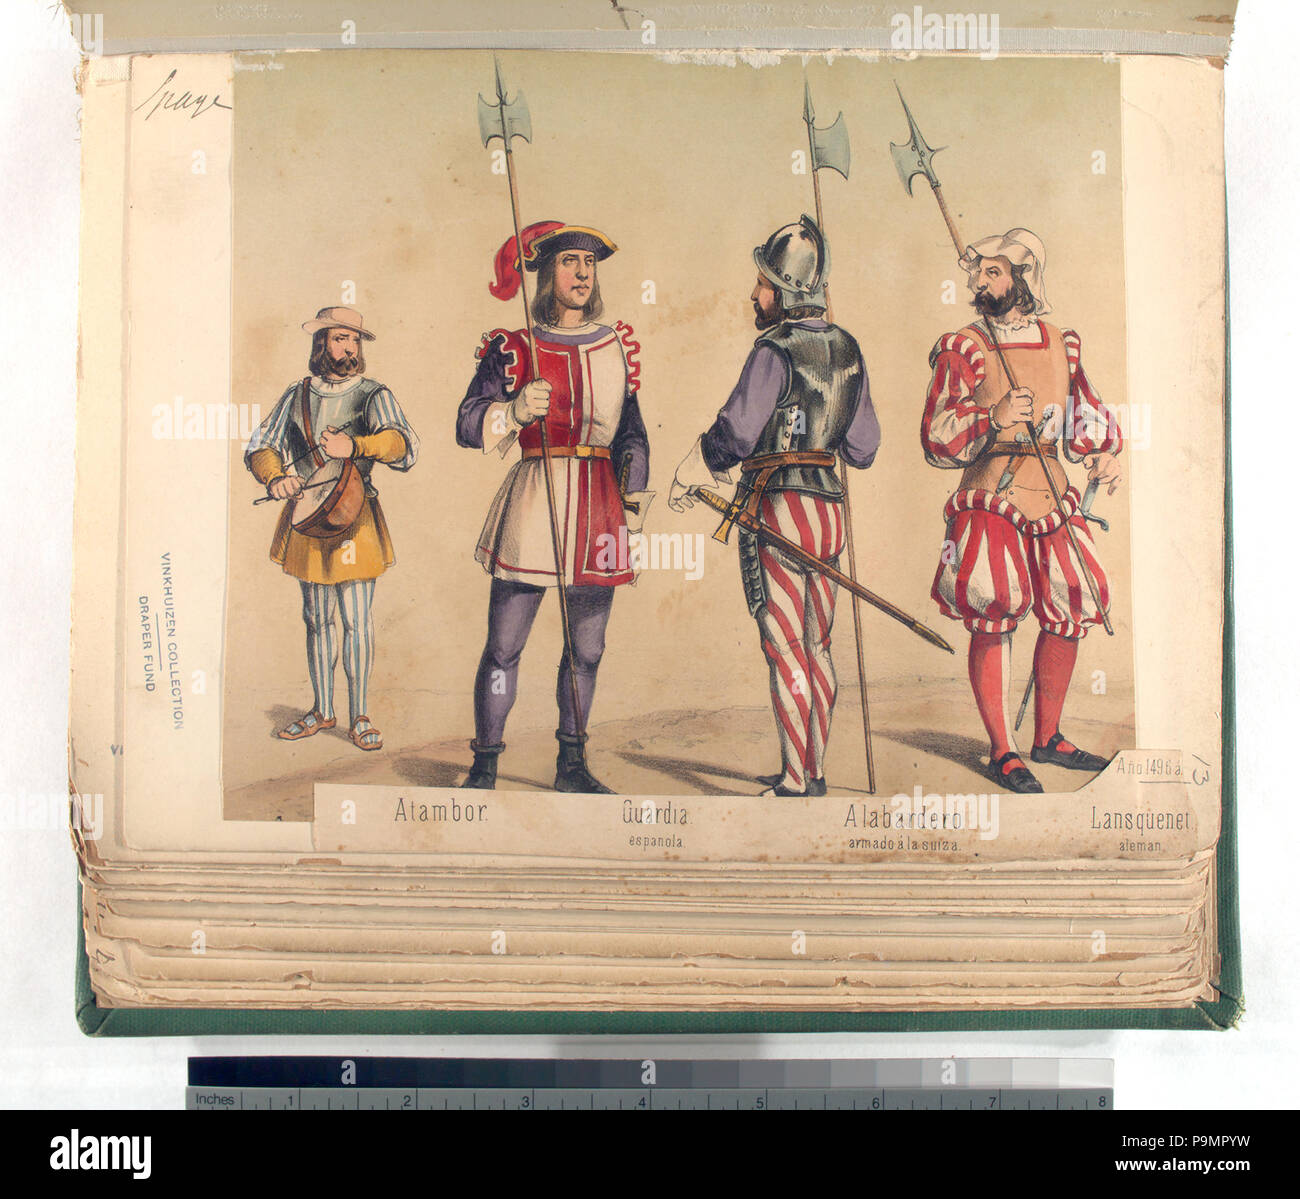 163 Atambor; Guardia, espanola; Alabardero, armado á la suiza; Lansquenet, aleman. 1496 (NYPL b14896507-87431) Stock Photo